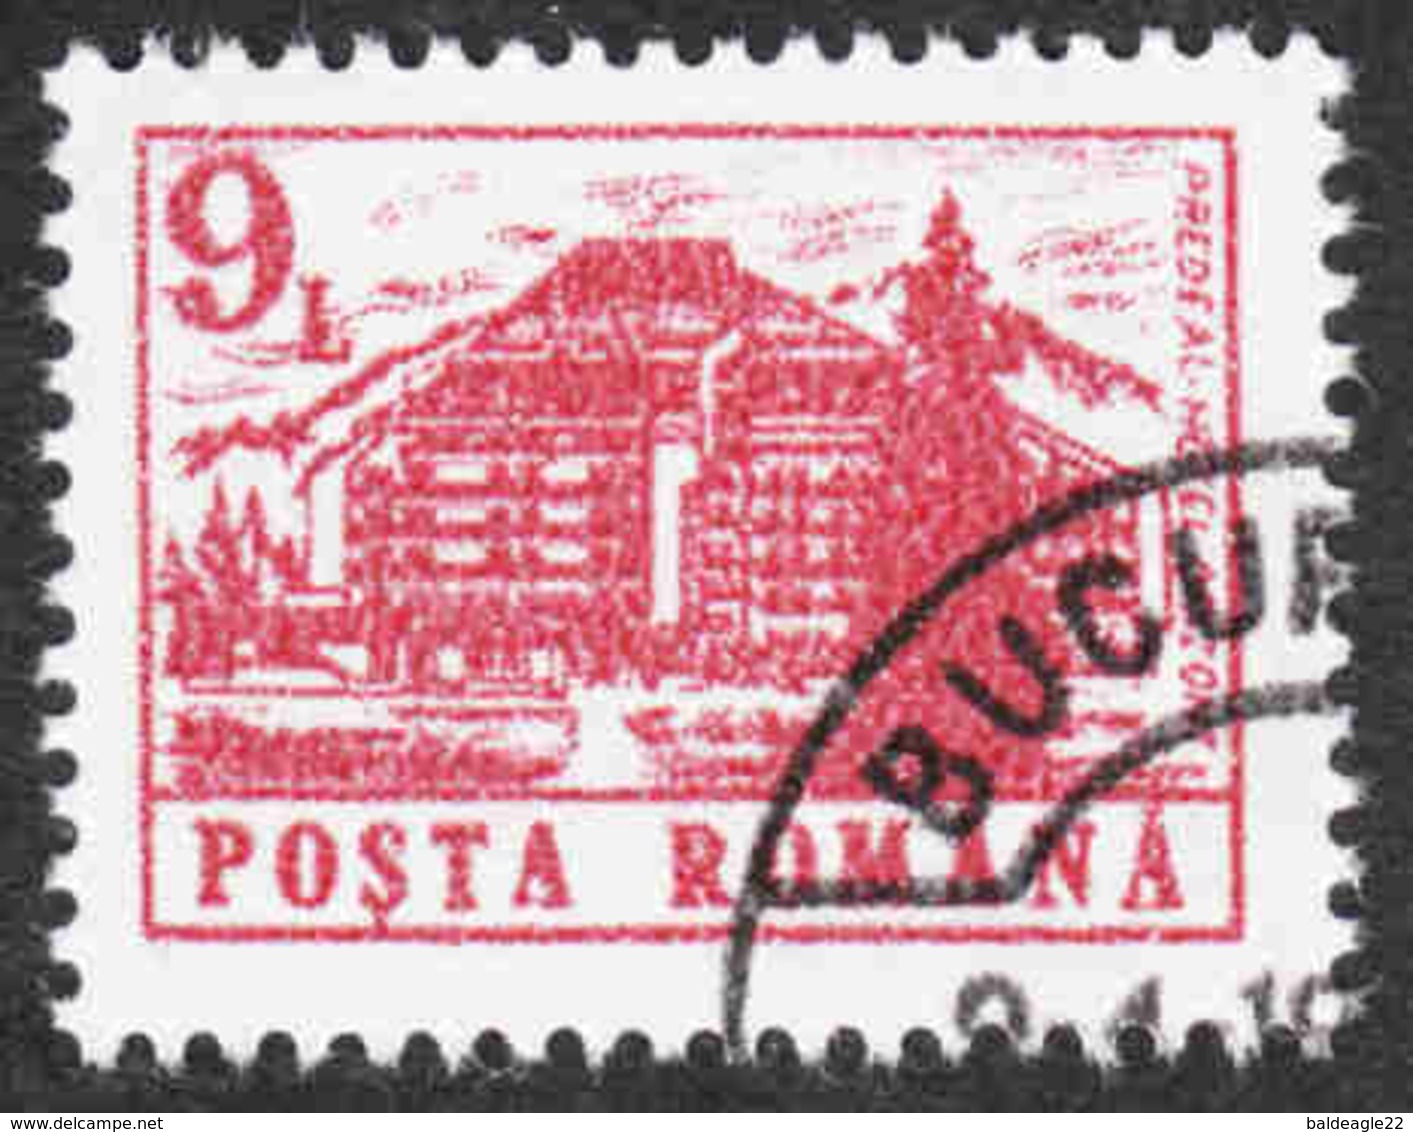 Romania - Scott #3670 CTO - Full Gum - Never Hinged (1) - Used Stamps